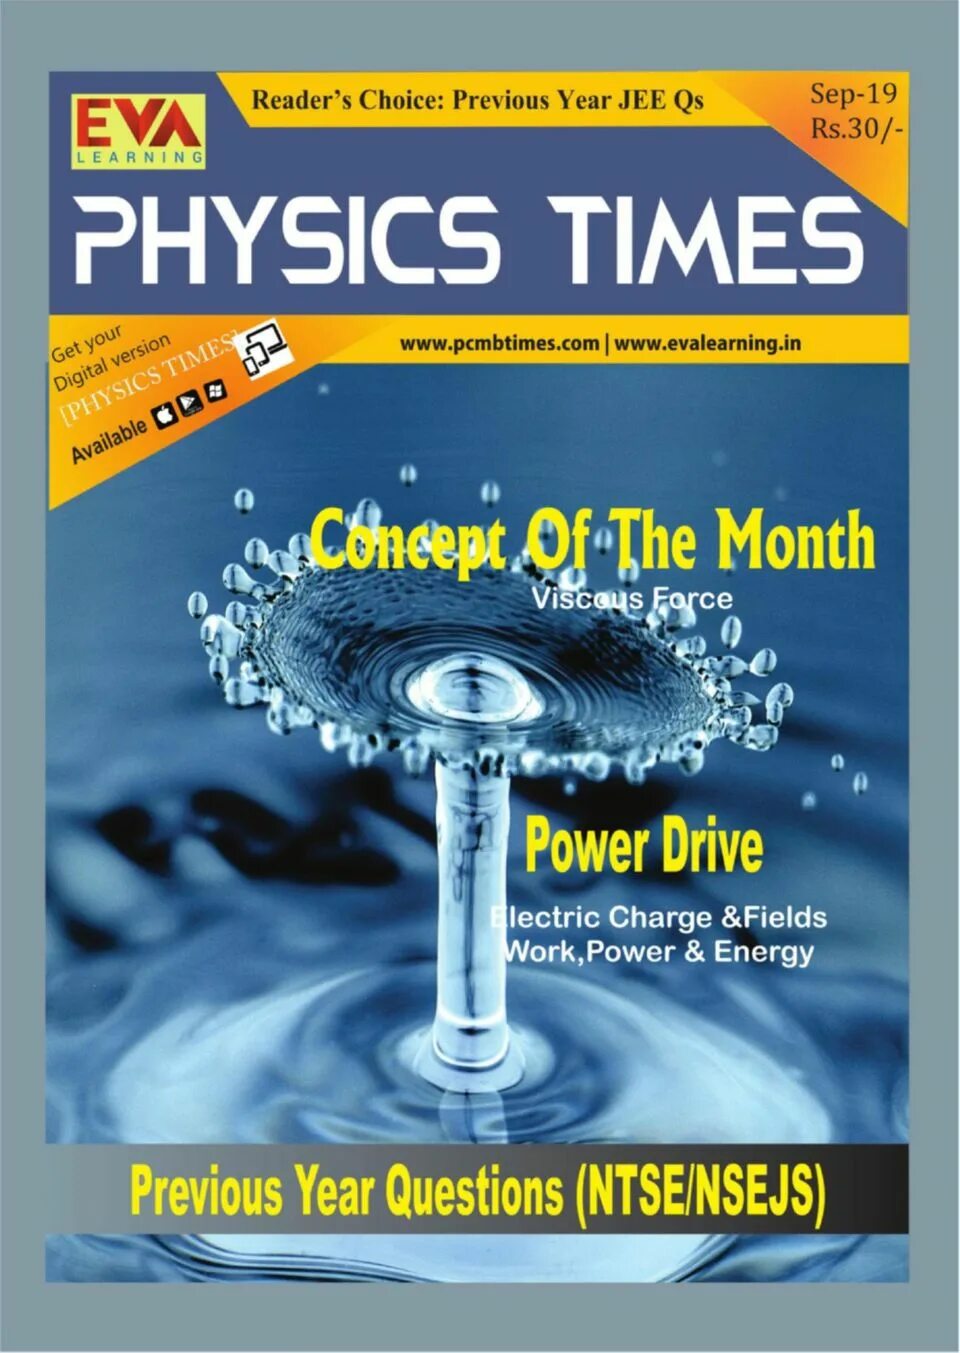 Physical time. Physics журнал. Журнал физика.